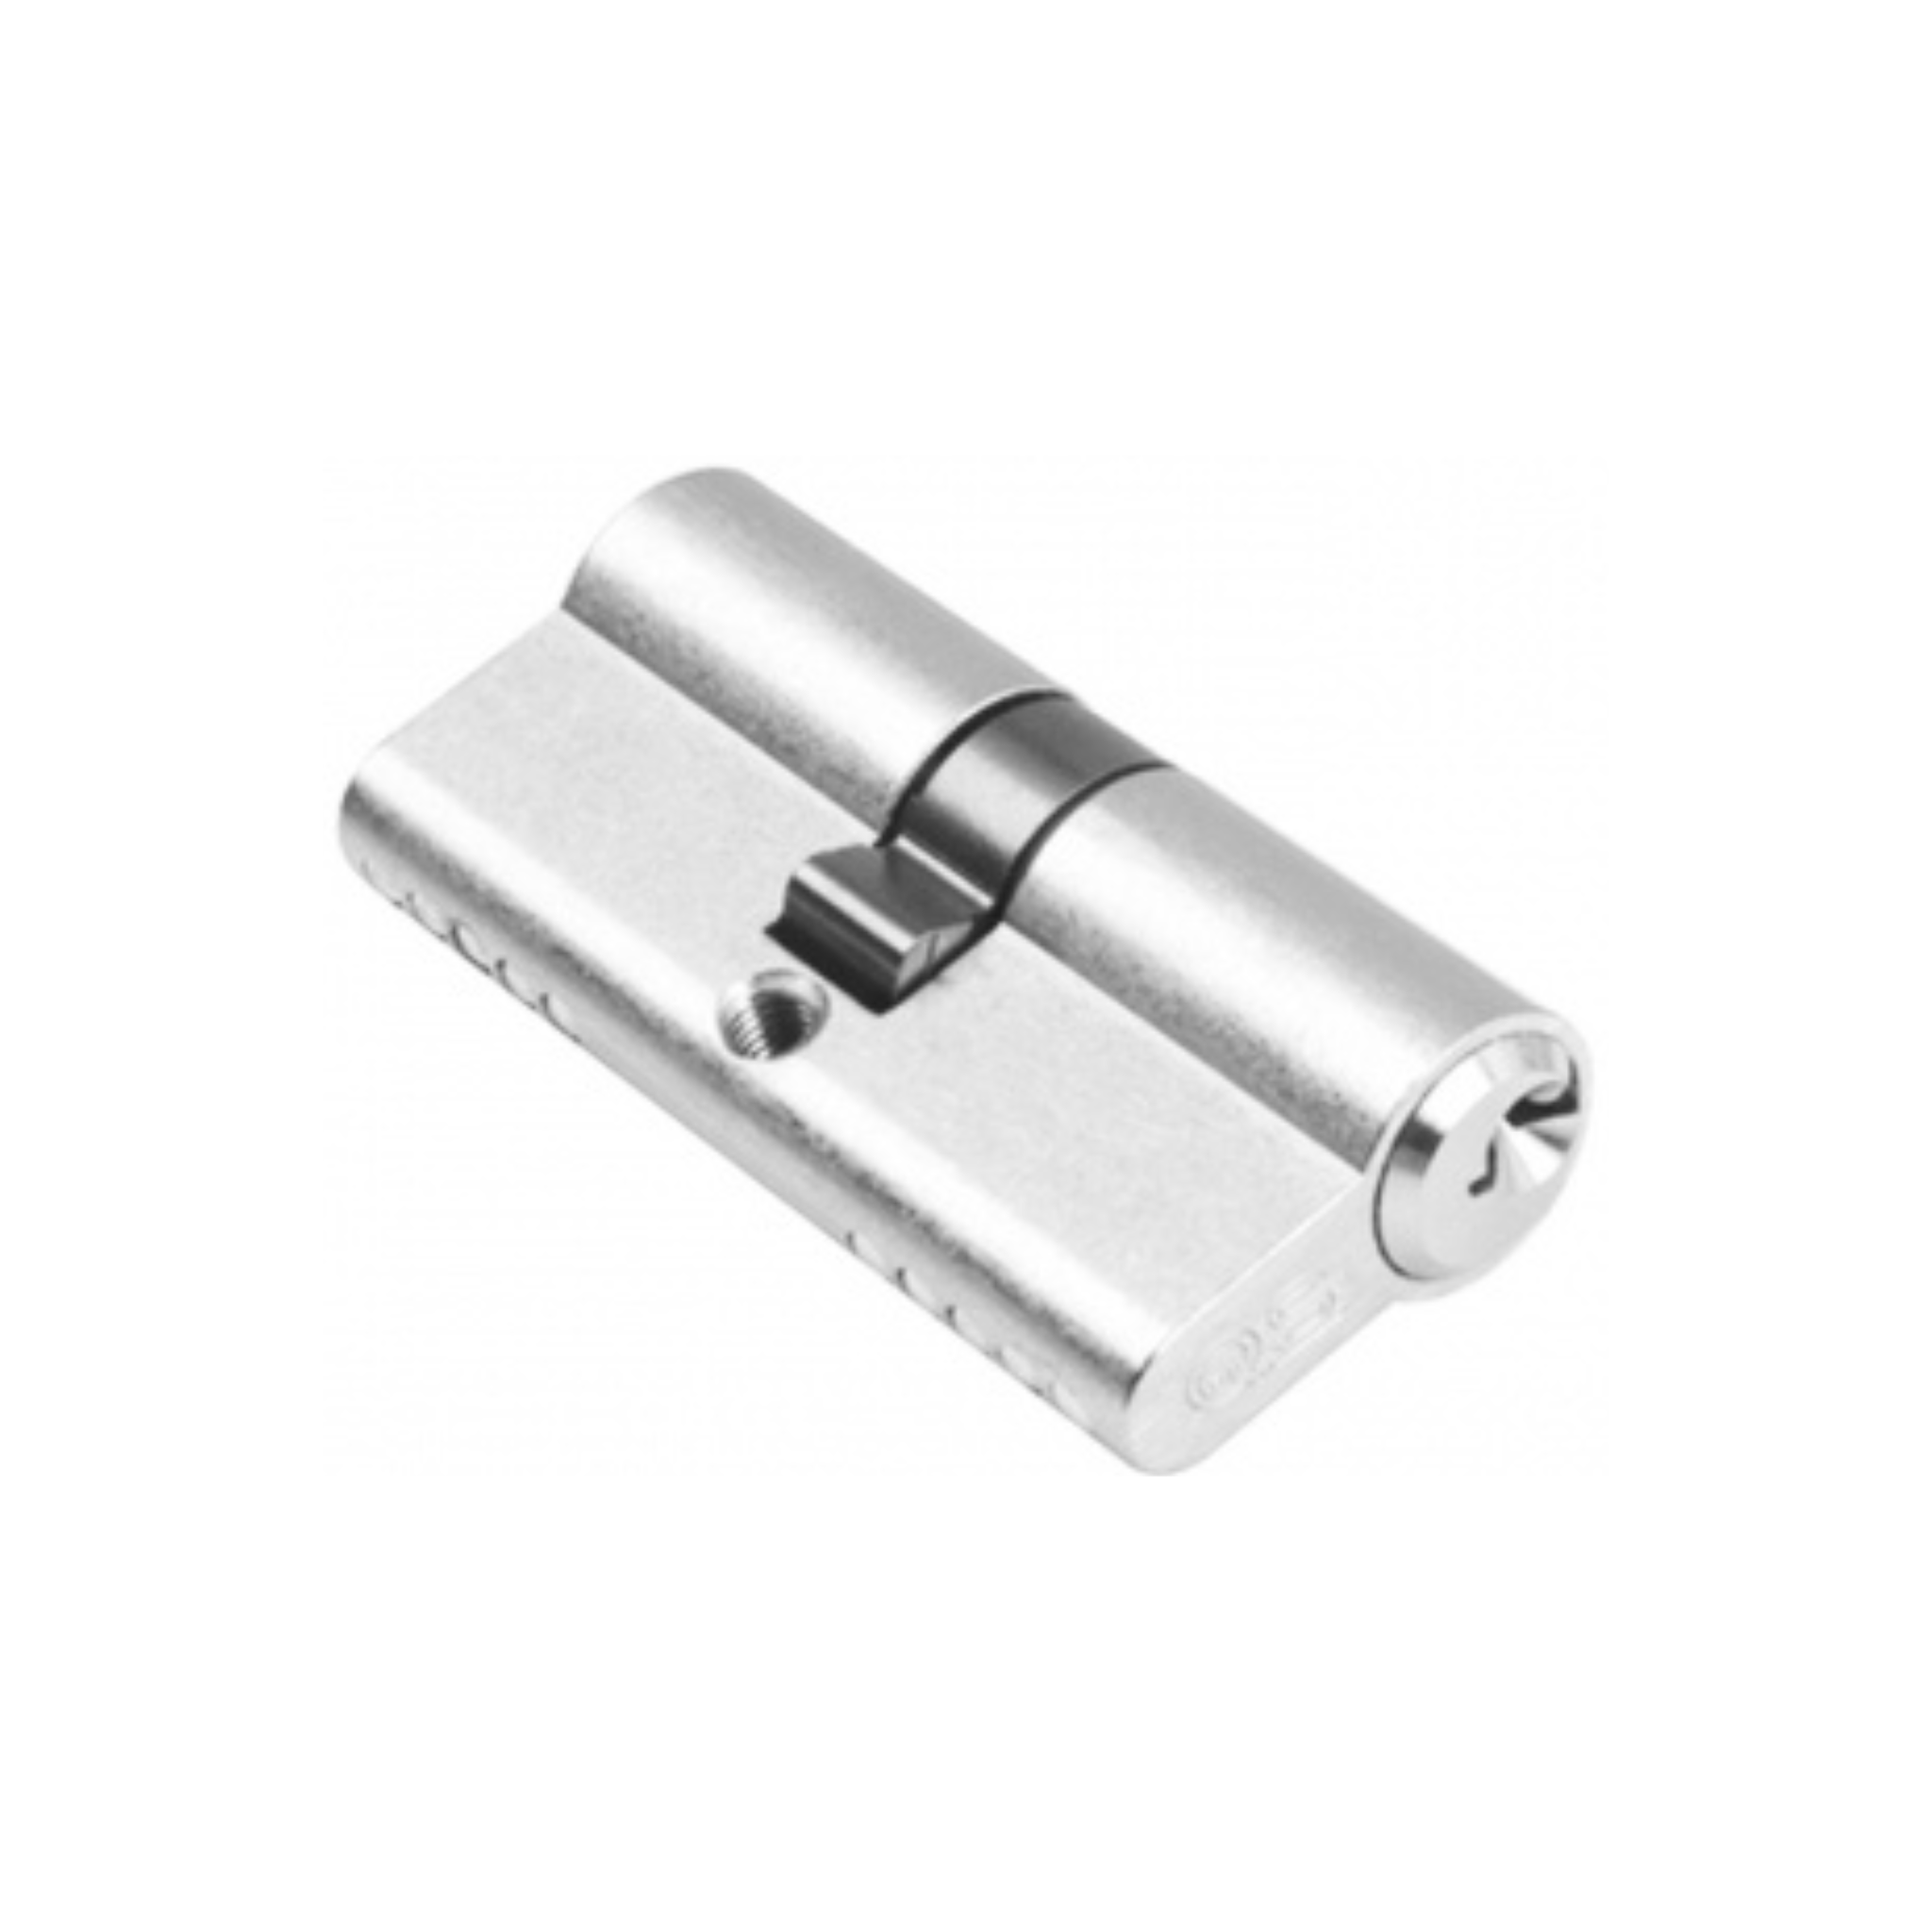 QS1104SN, 66mm - 33/33, Double Cylinder, Key to Key, Keyed to Differ (Standard), 3 Keys, 5 Pin, Satin Nickel, QS